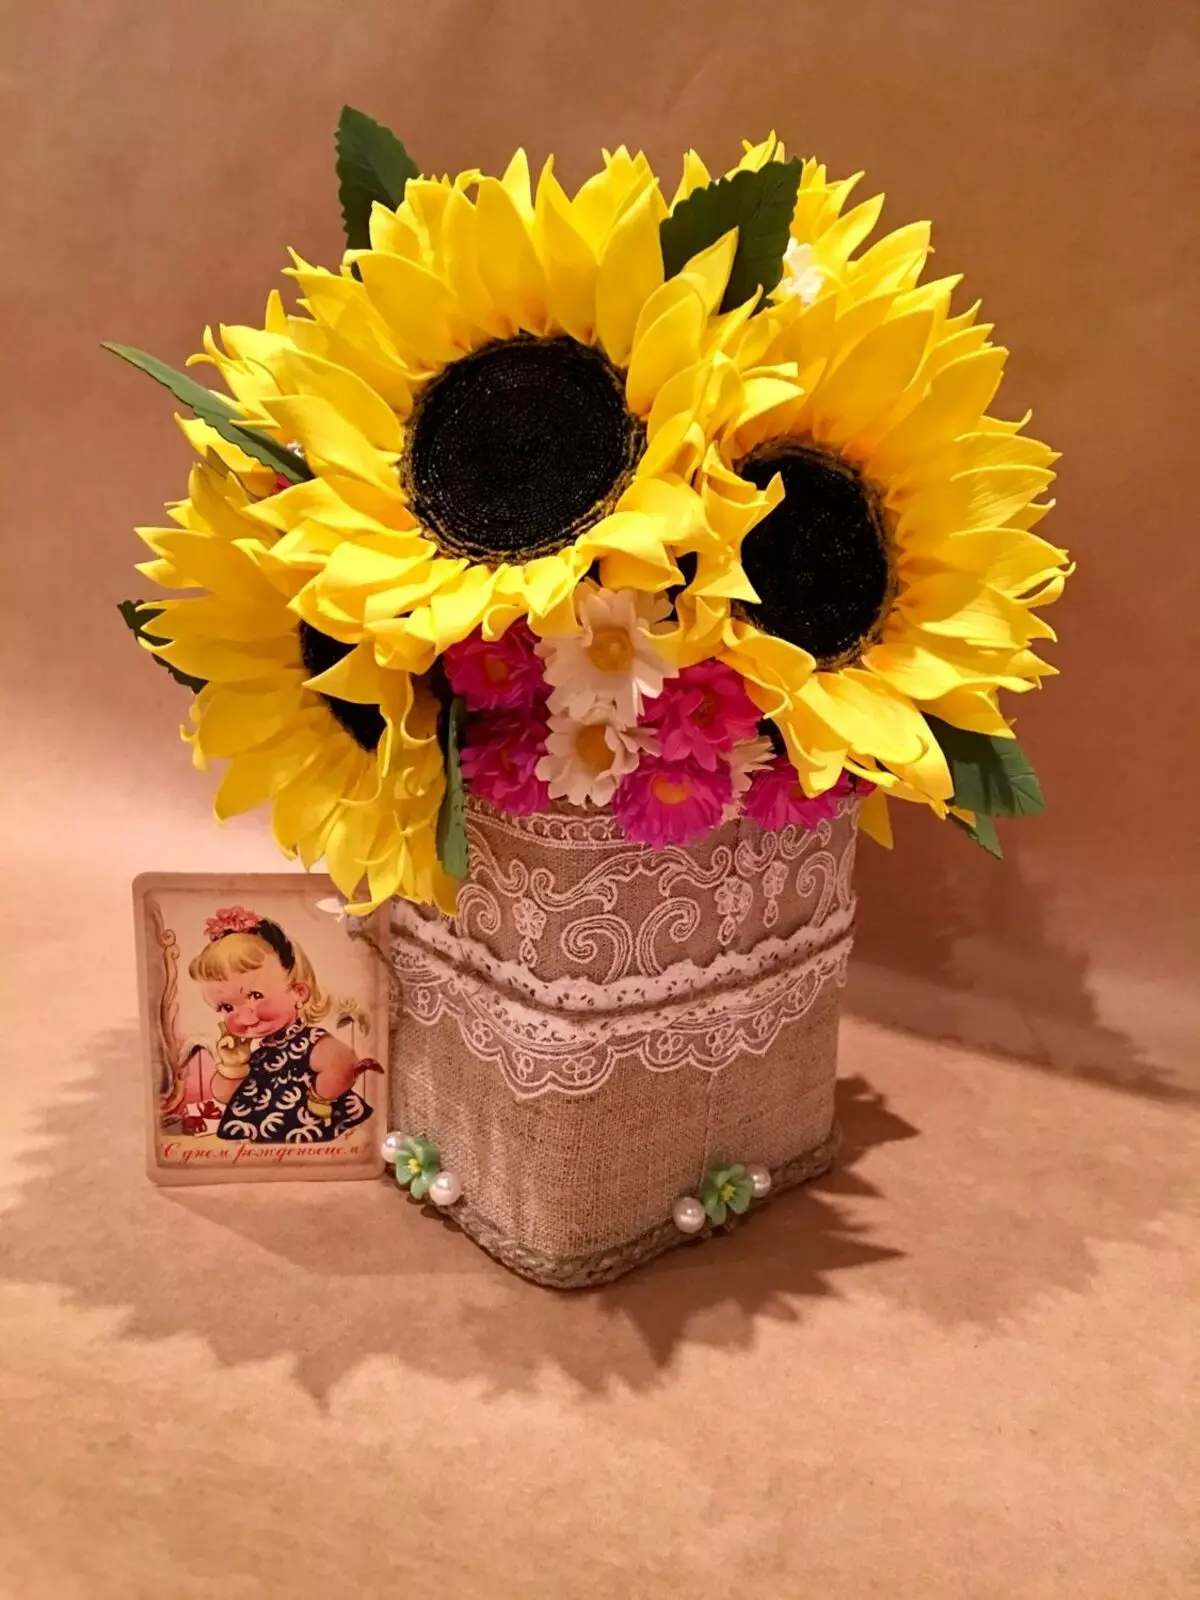 Foamyran (28 تصاویر) سے Sunflowers: ہم آپ کے اپنے ہاتھوں، قدم بہ قدم ماسٹر کلاس، پیٹرن اور پیٹرن میں اضافہ کرتے ہیں 26862_5